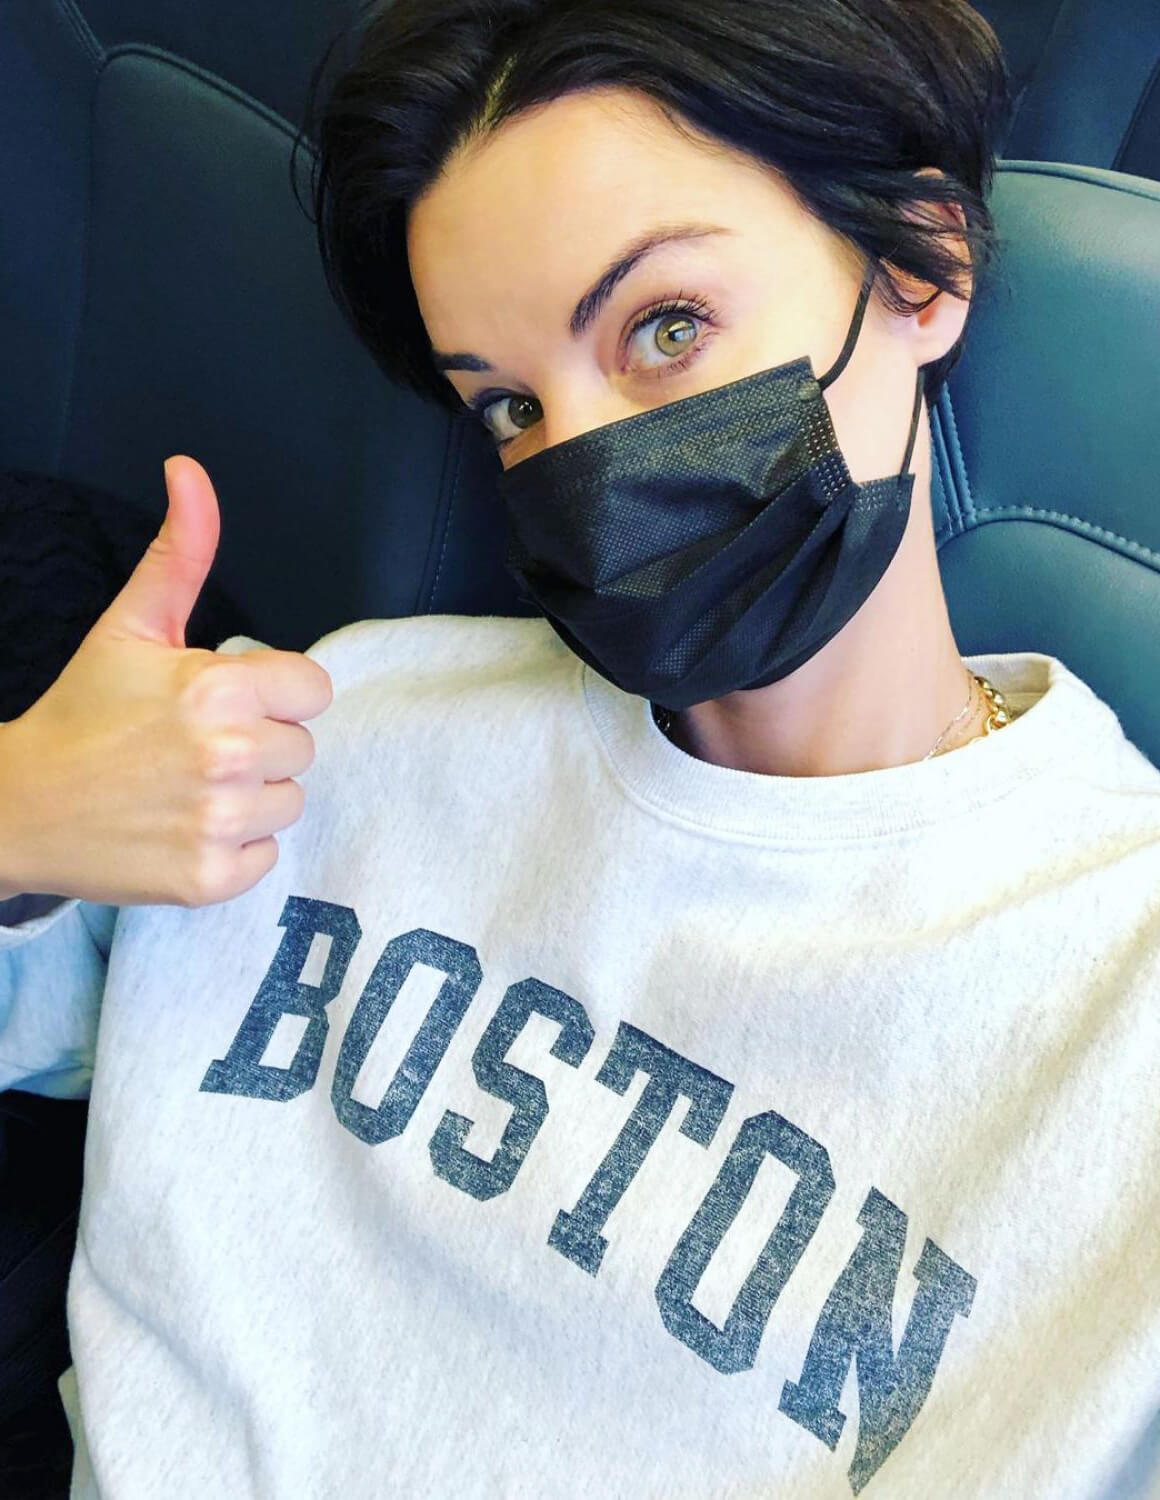 Jaimie Alexander wearing Black Face Mask - Instagram Photos 12/05/2020